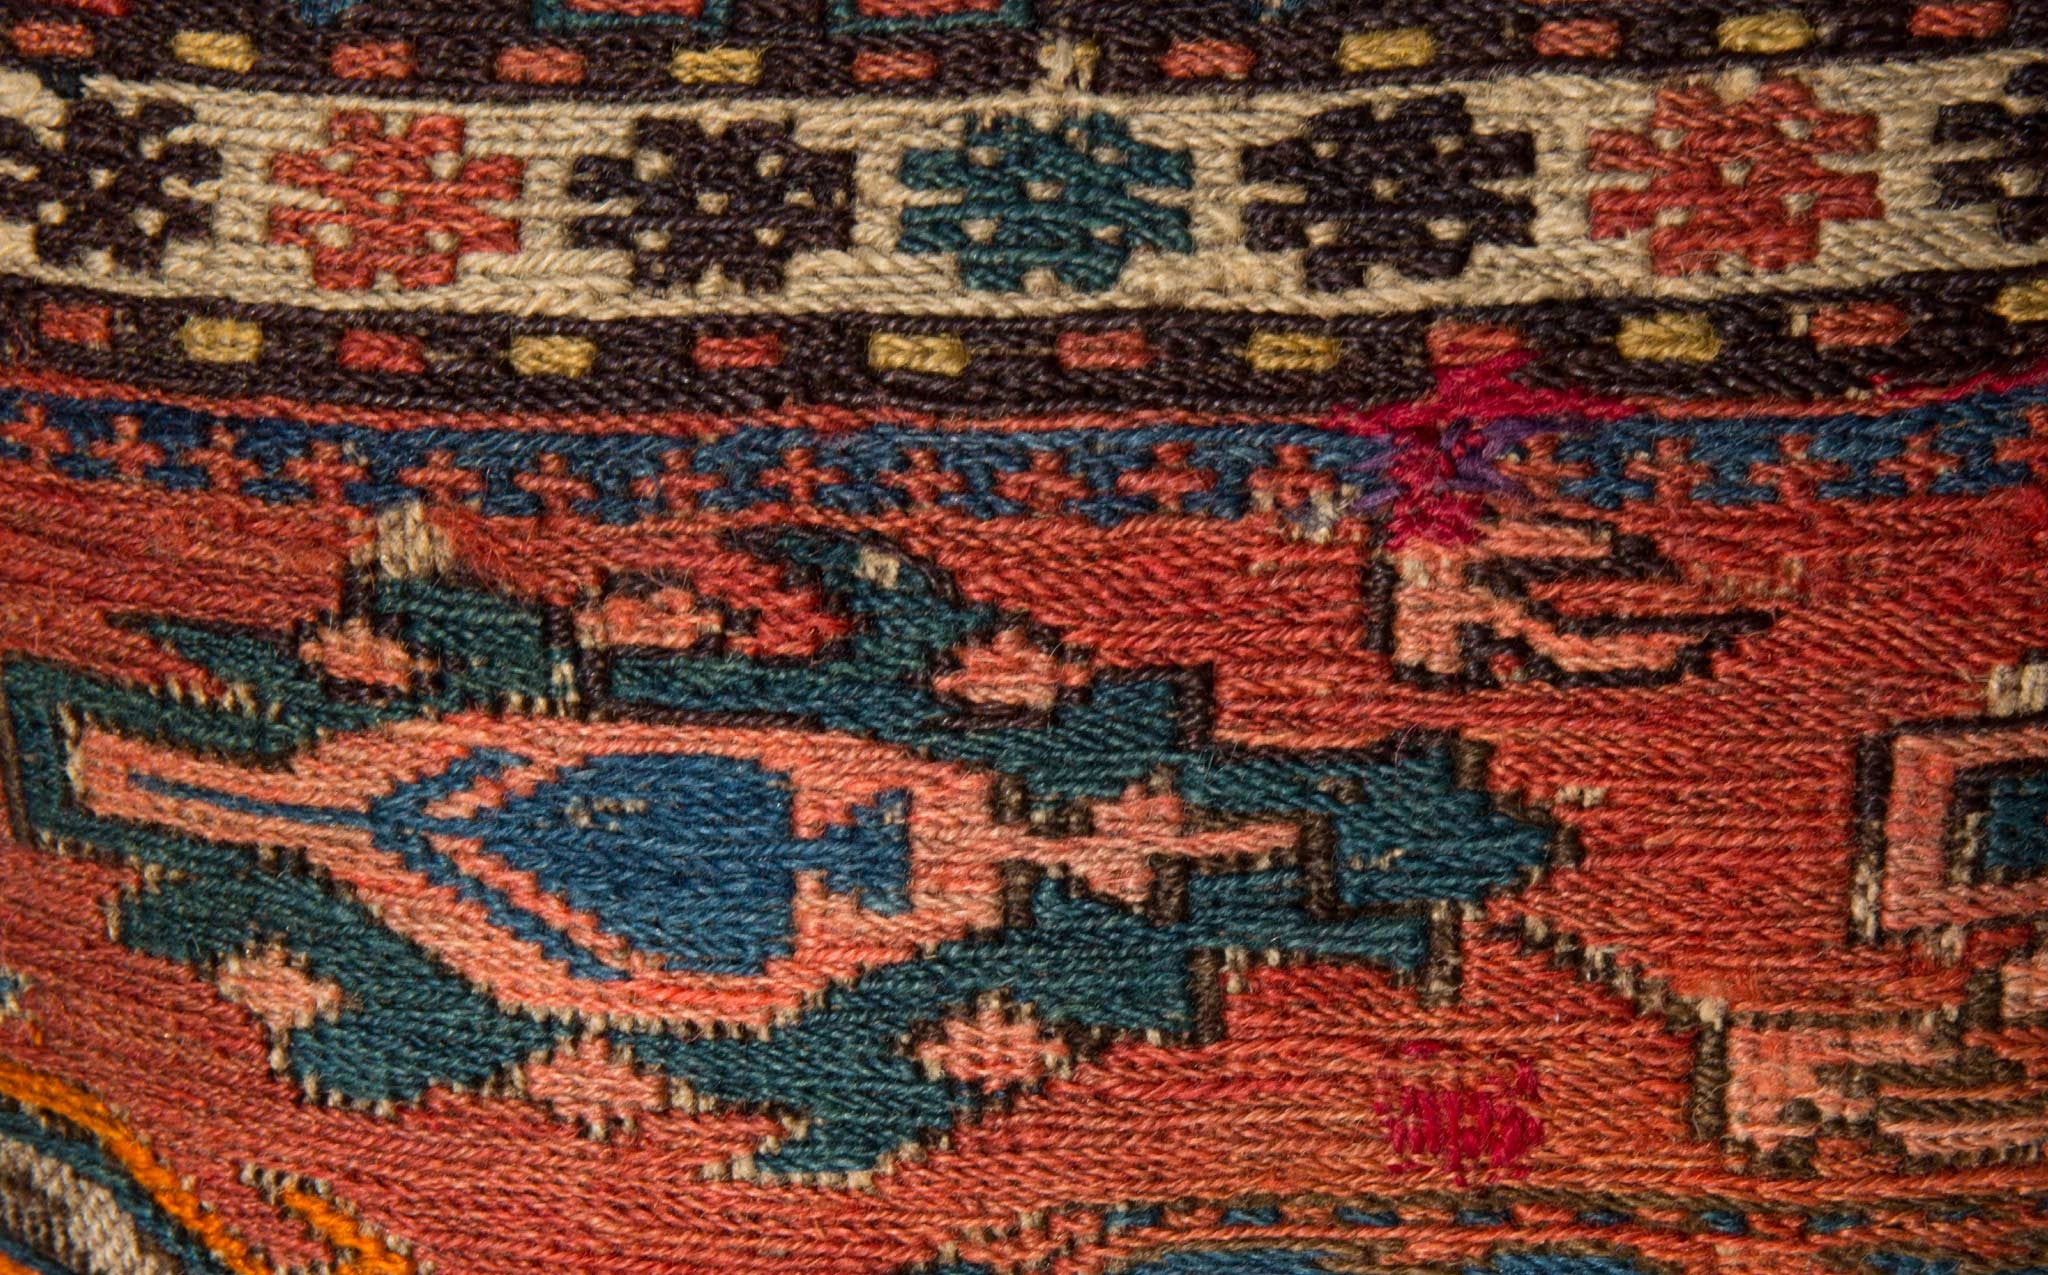 Antique Turkish Wool Kilim Throw Pillow